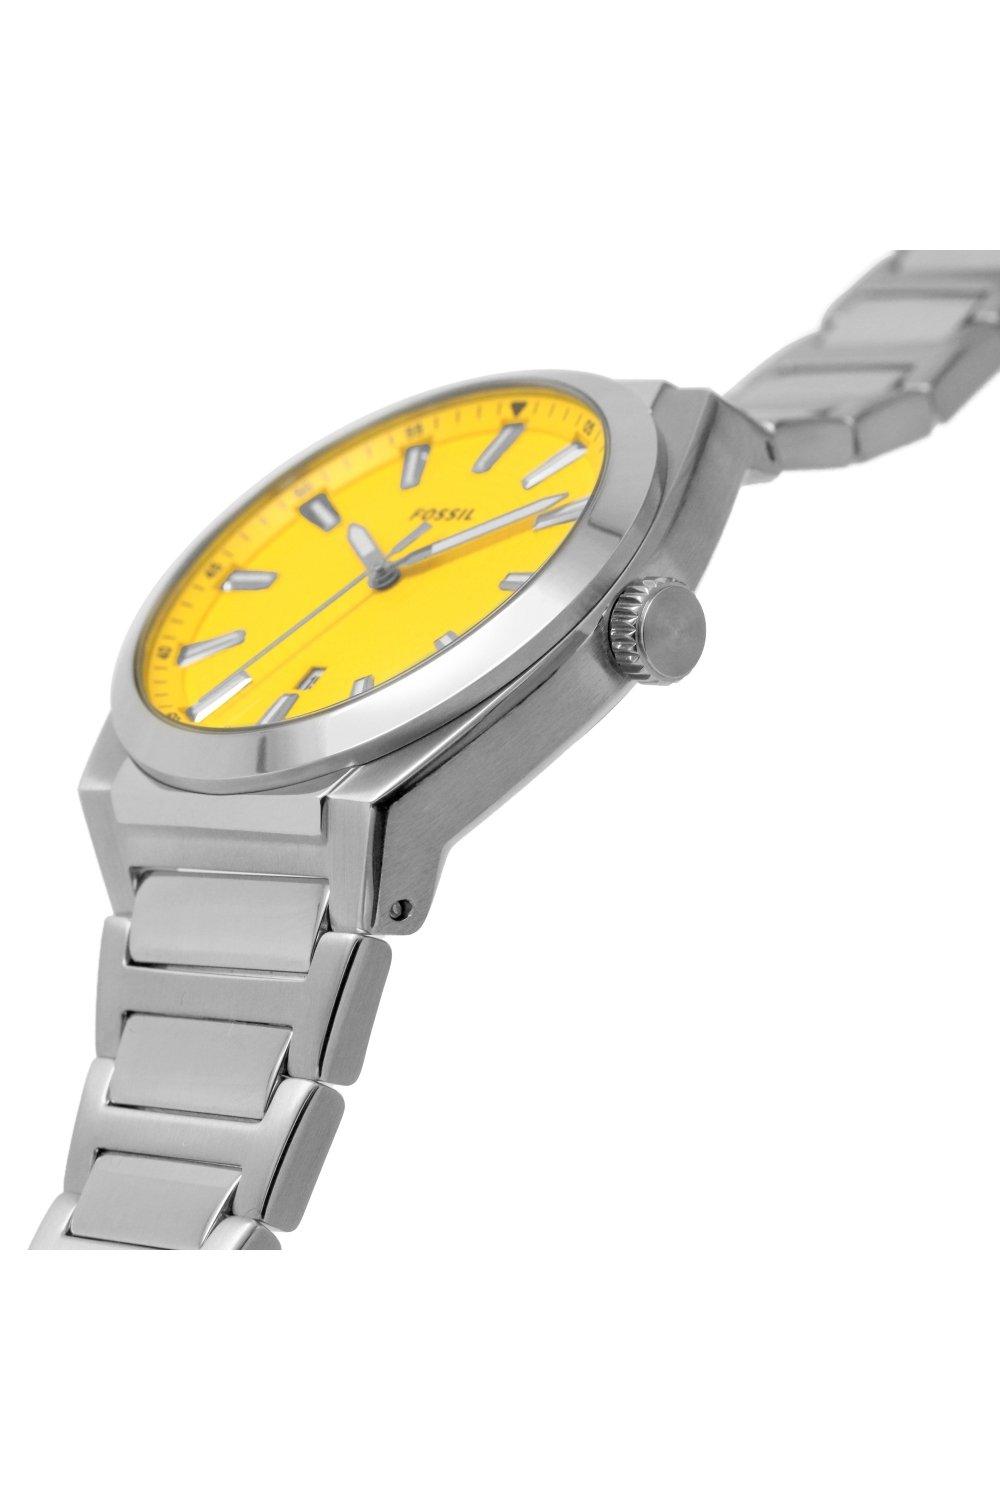 Watches | Everett Stainless Steel Fashion Analogue Quartz Watch - Fs5985 |  Fossil